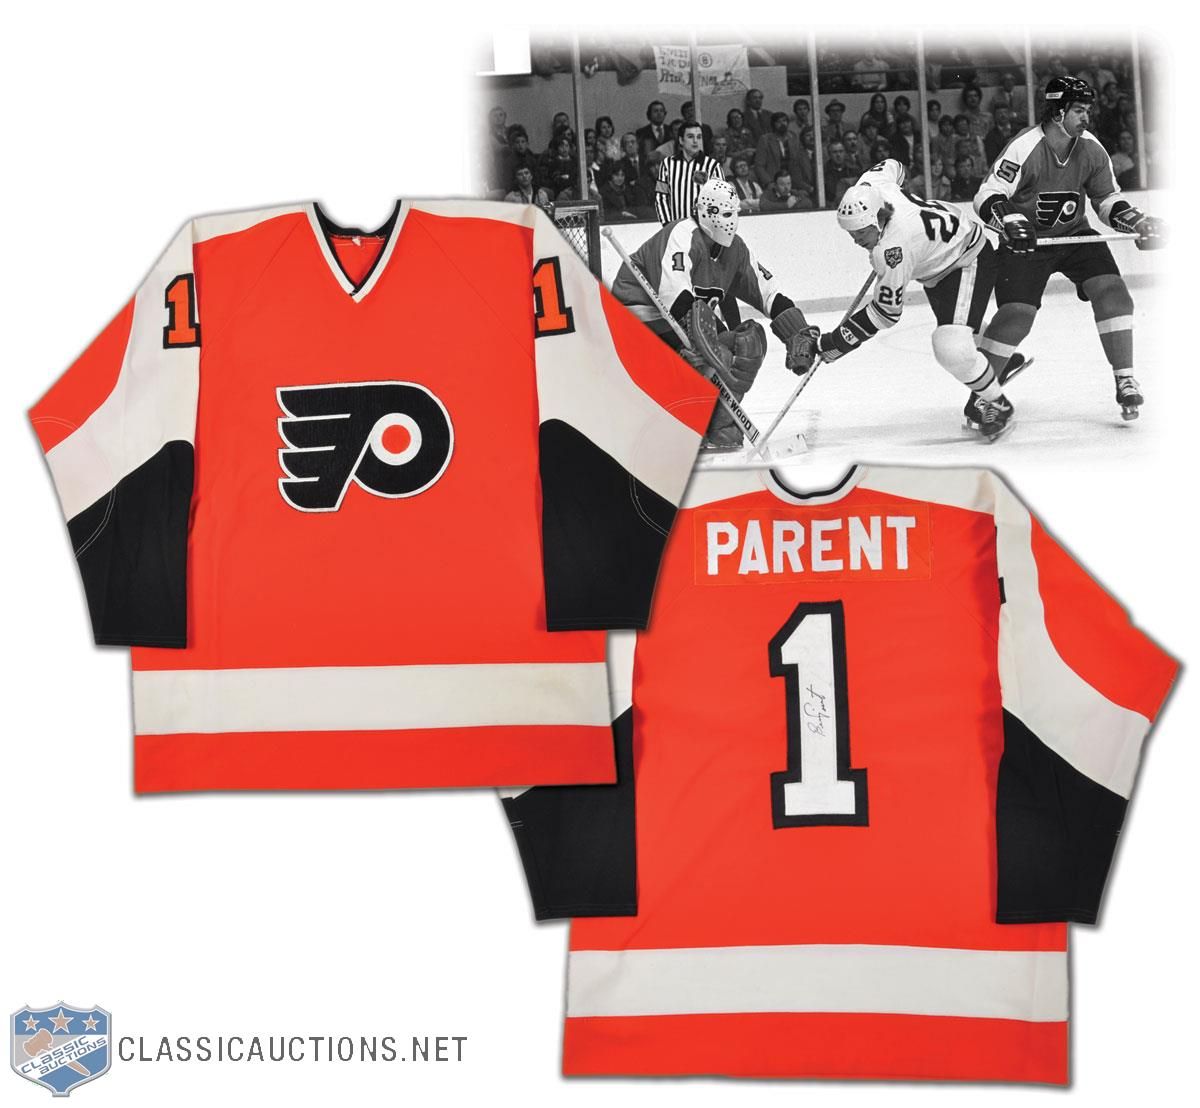 1975-76 Bernie Parent Philadelphia Flyers Game Worn Jersey - Photo